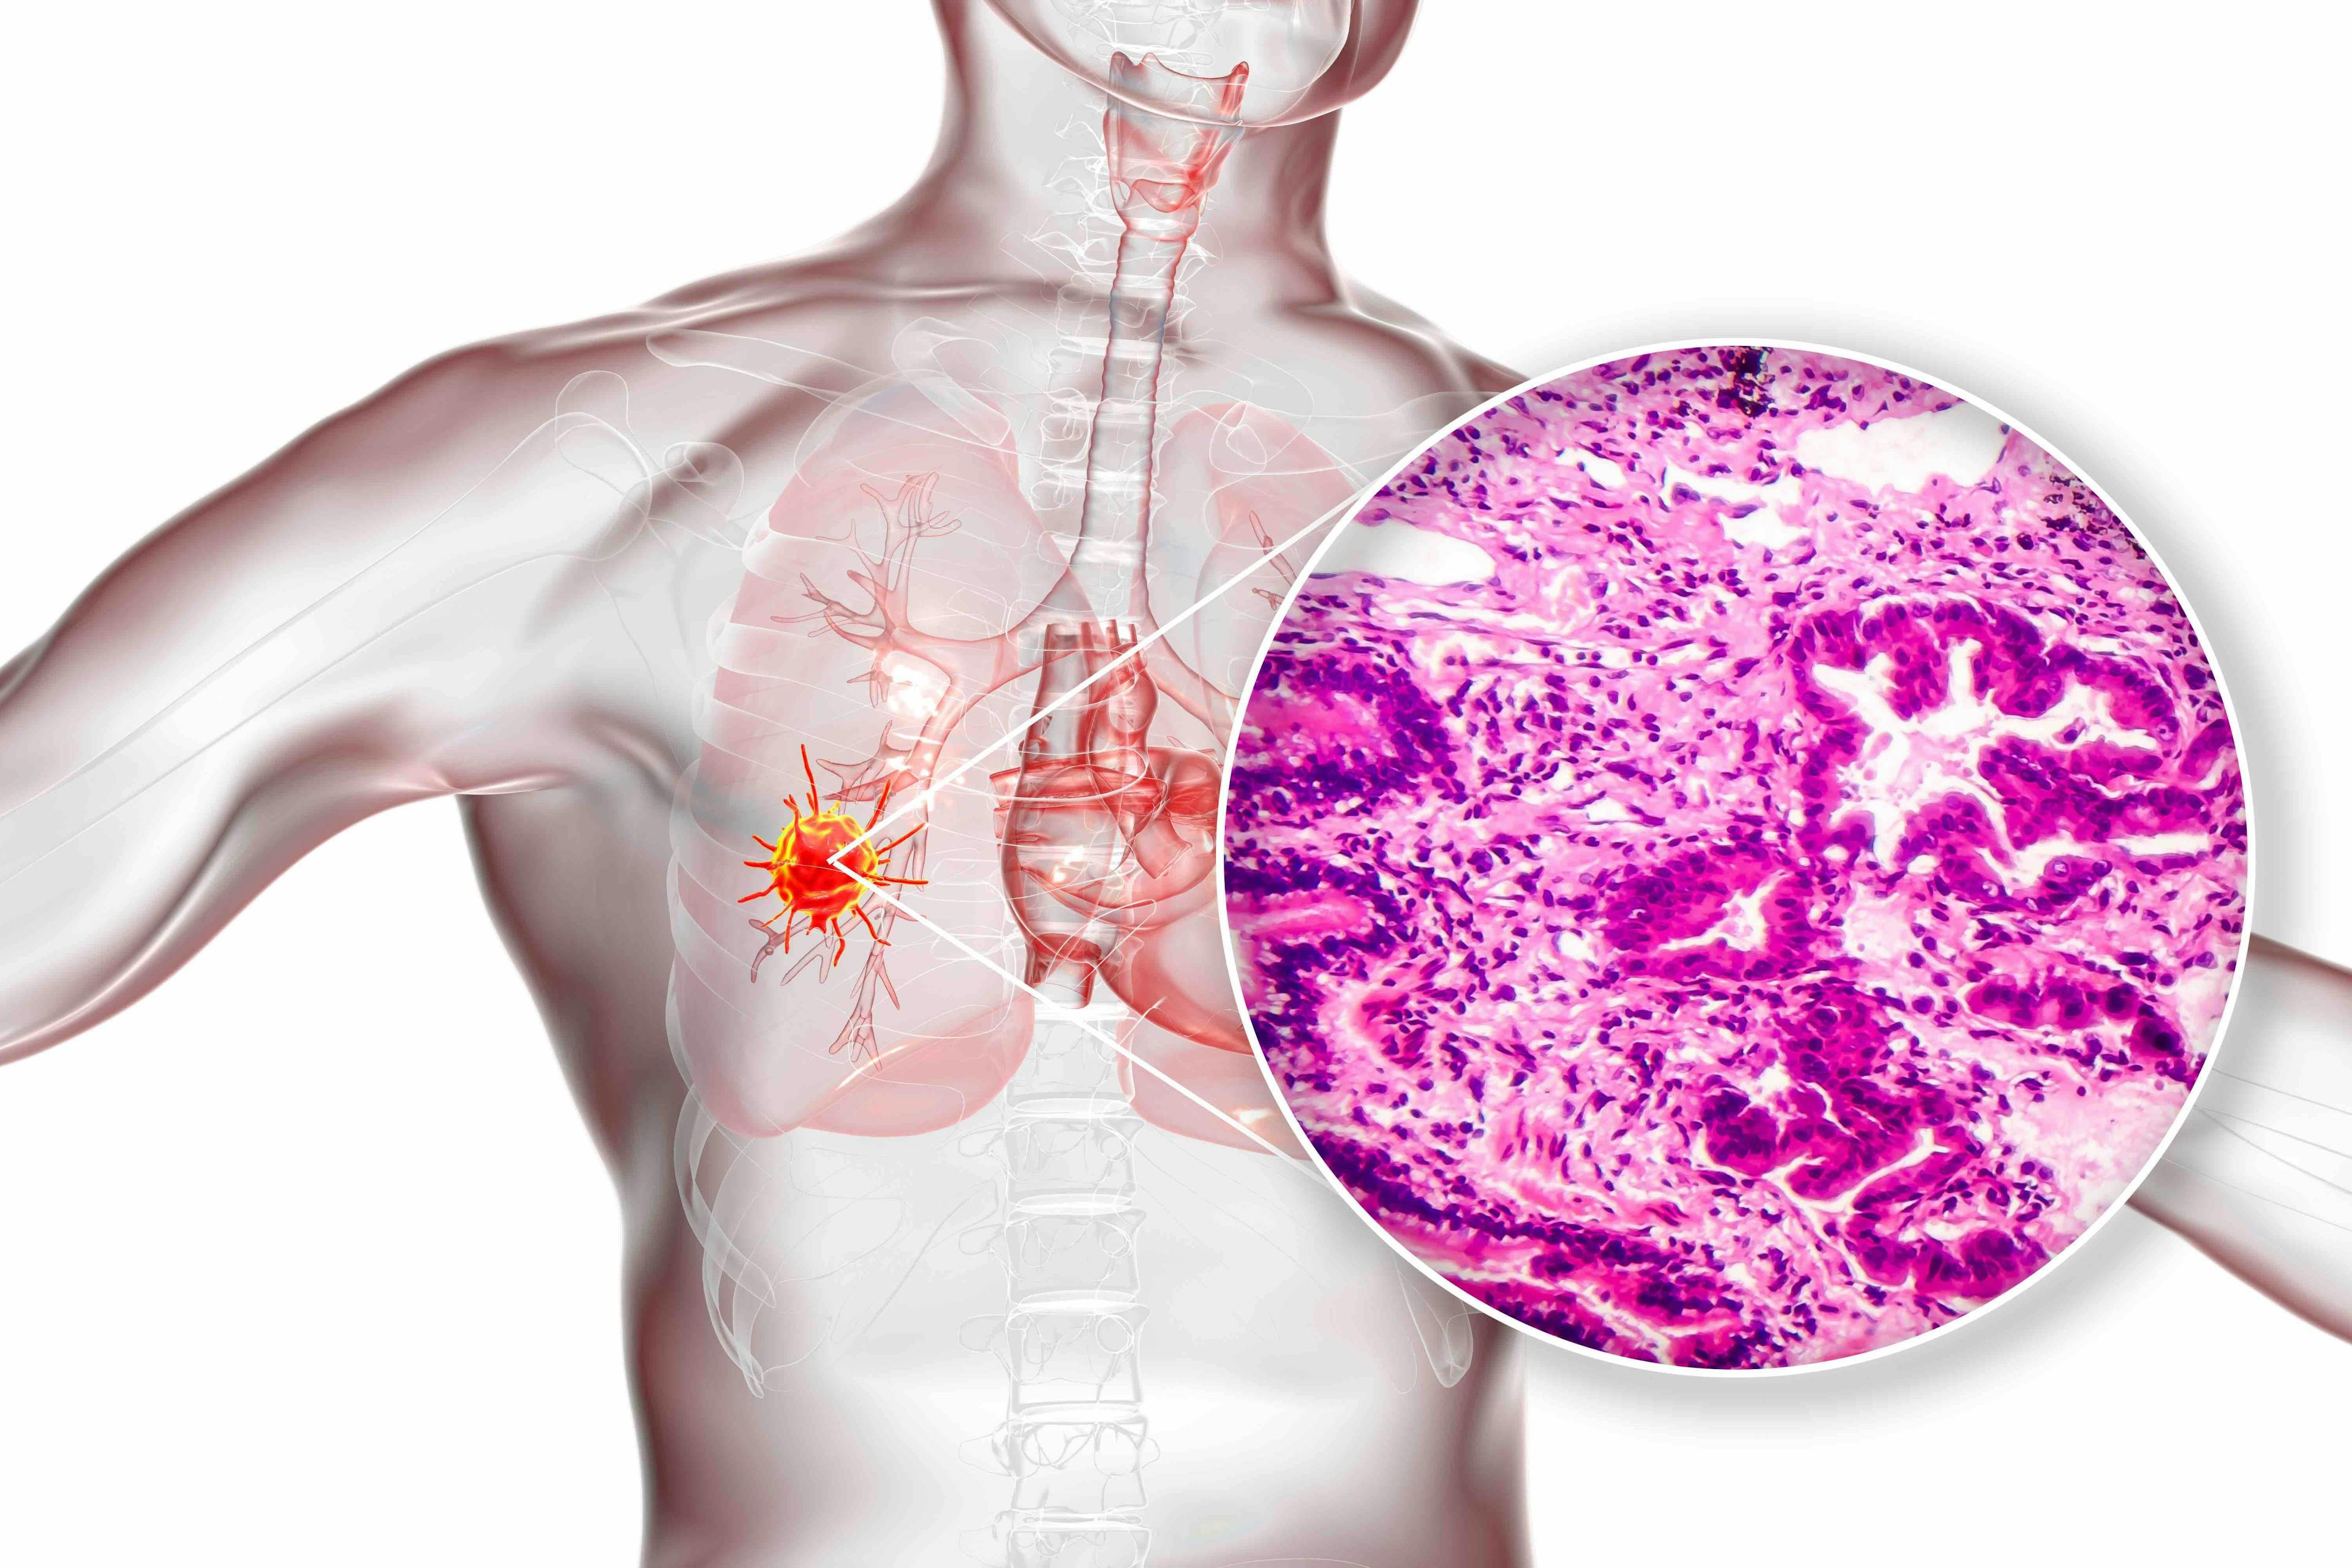 Lung cancer illustration | Image credit: Dr_Microbe - stock.adobe.com